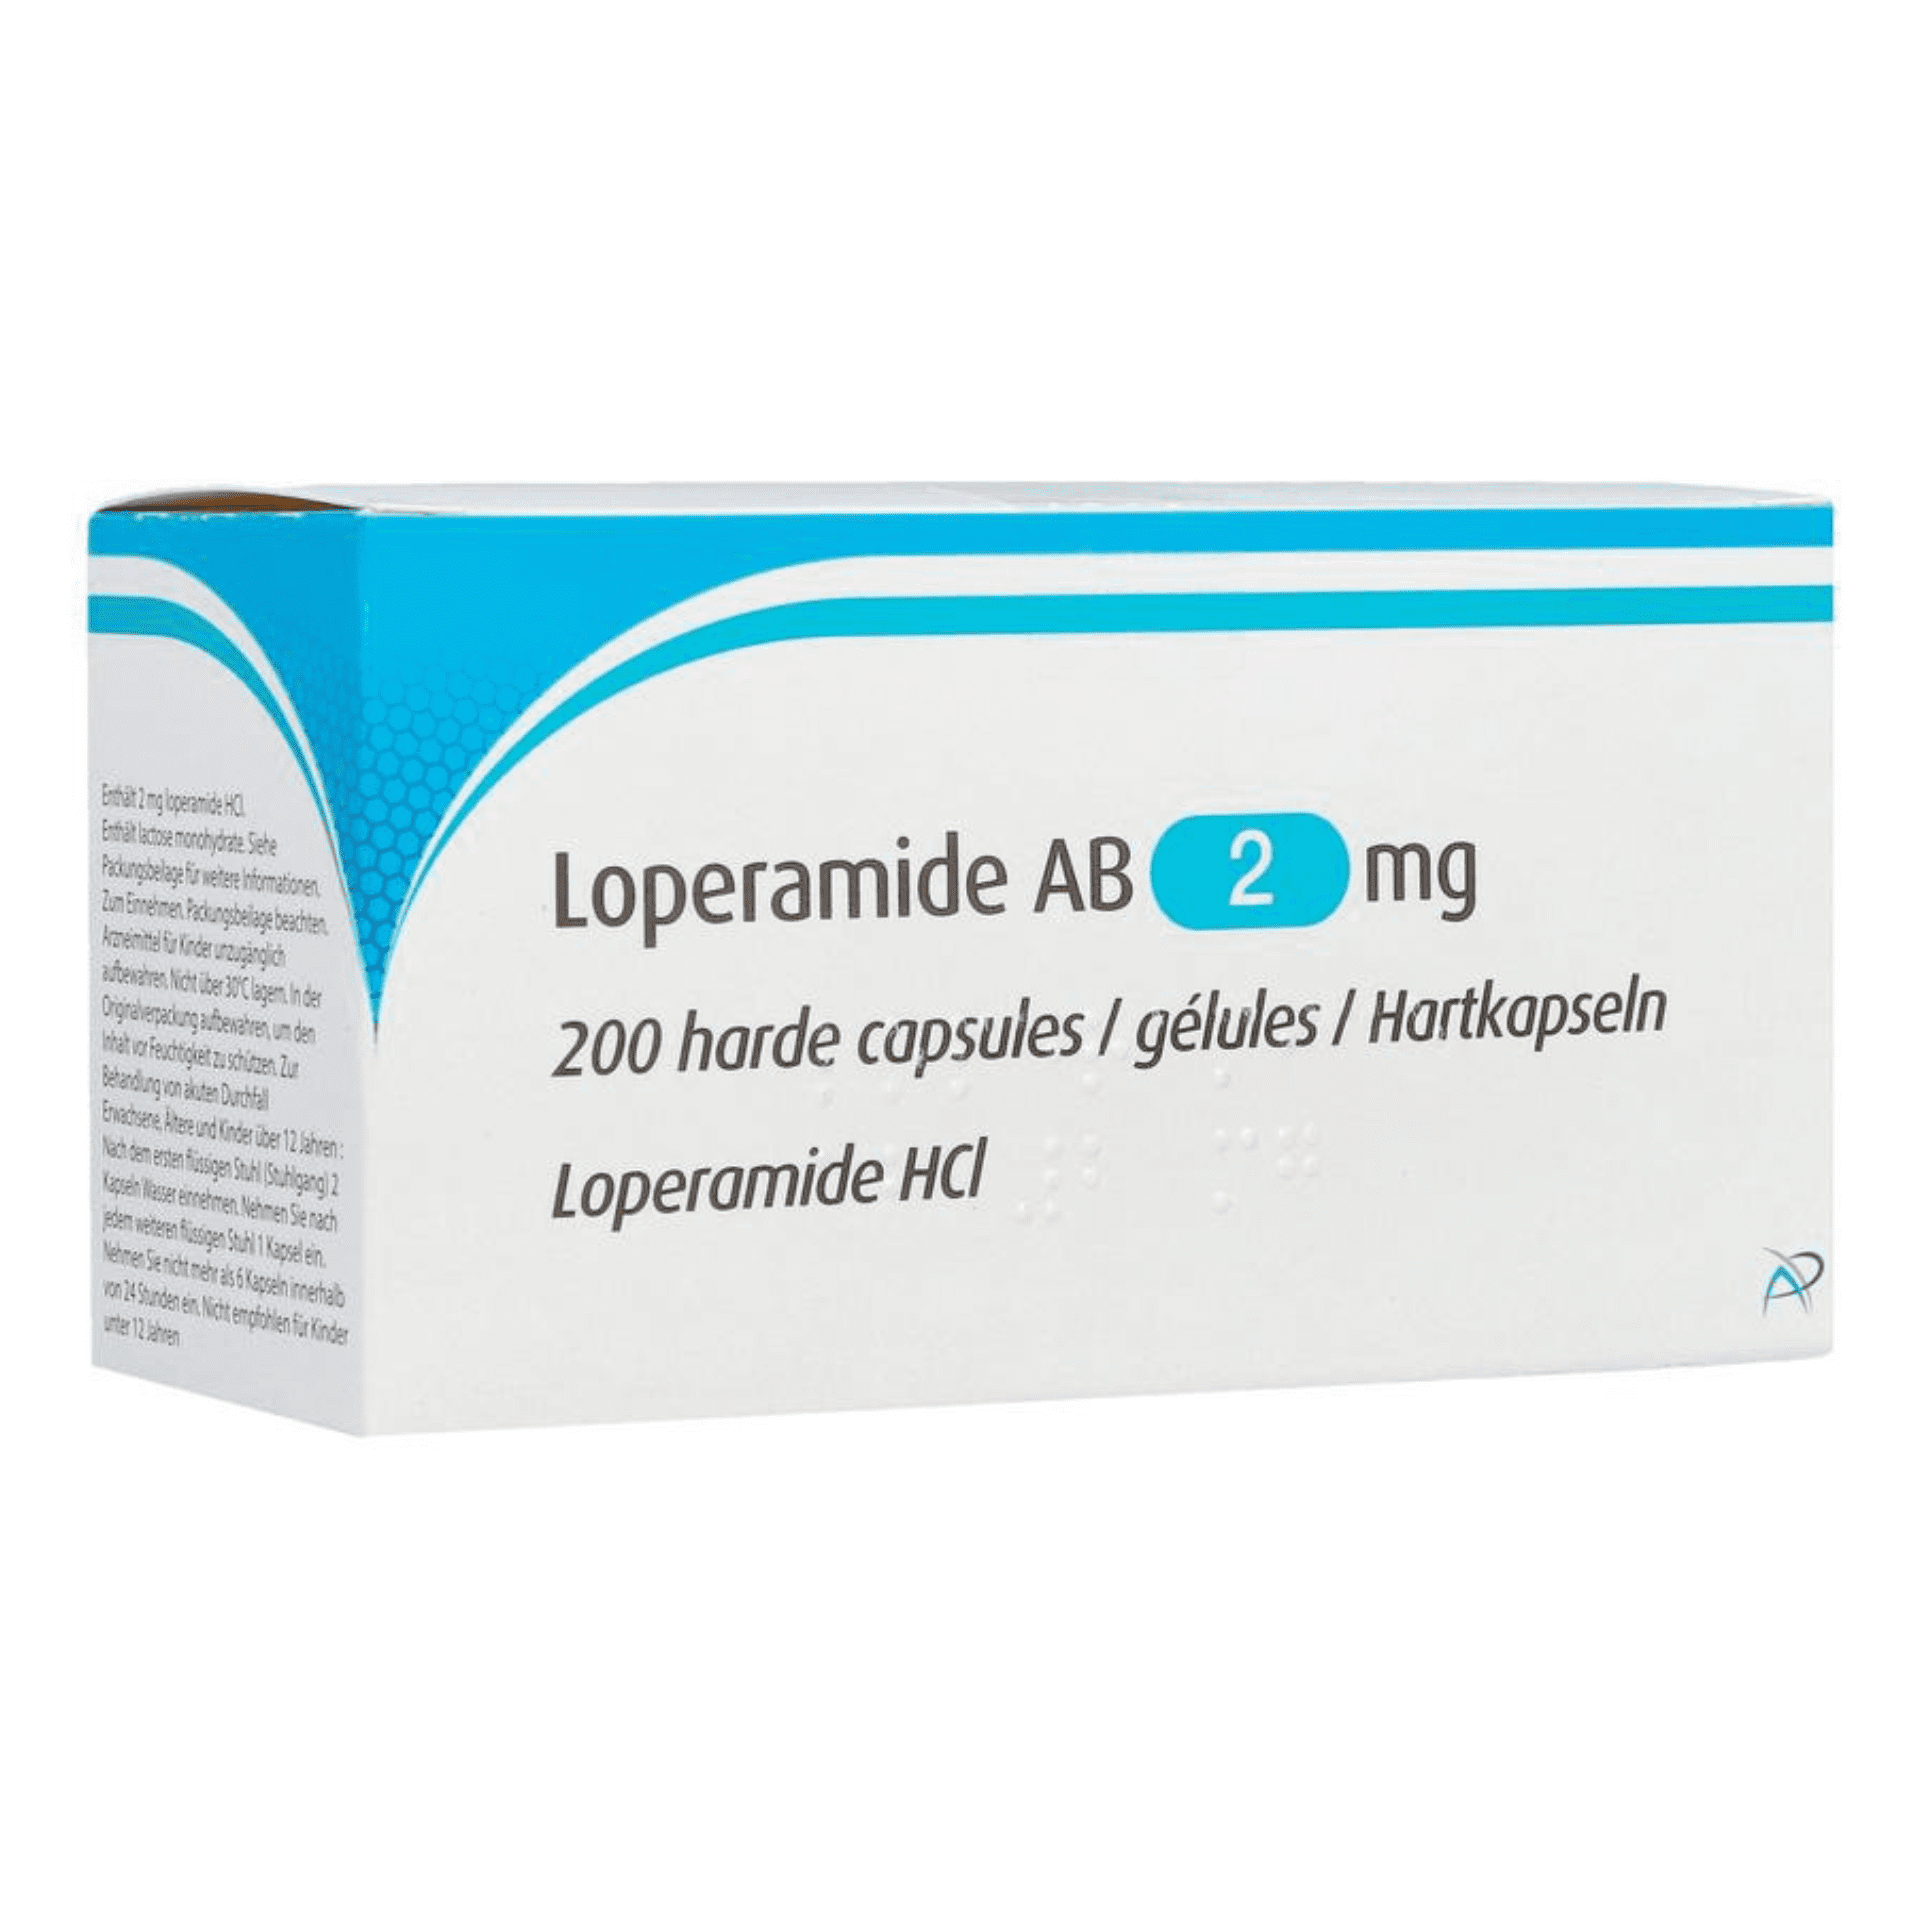 Loperamide Ab 2mg Harde Capsules